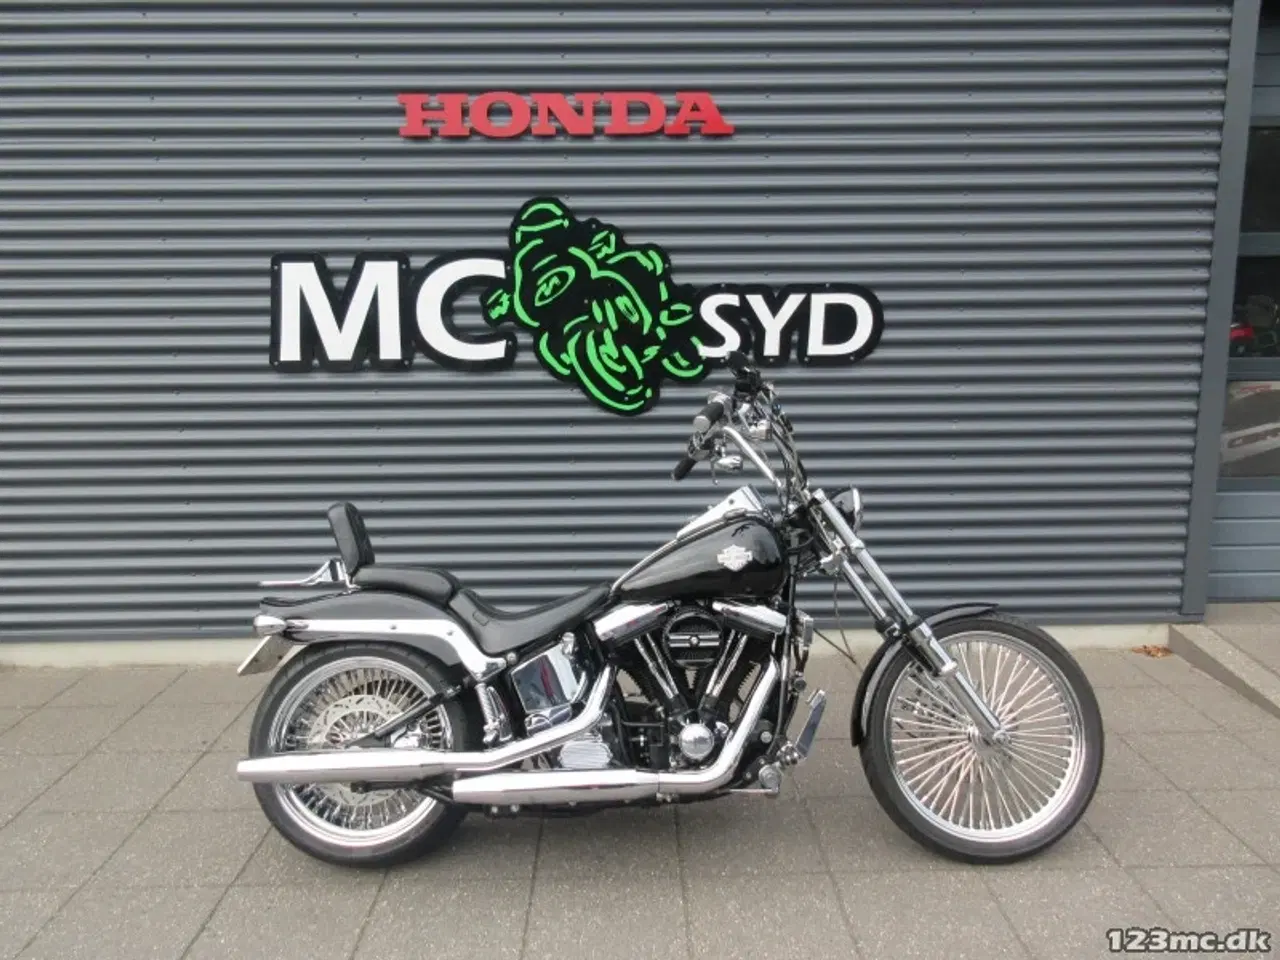 Billede 1 - Harley-Davidson FXSTC Softail Custom MC-SYD ENGROS /Bytter gerne